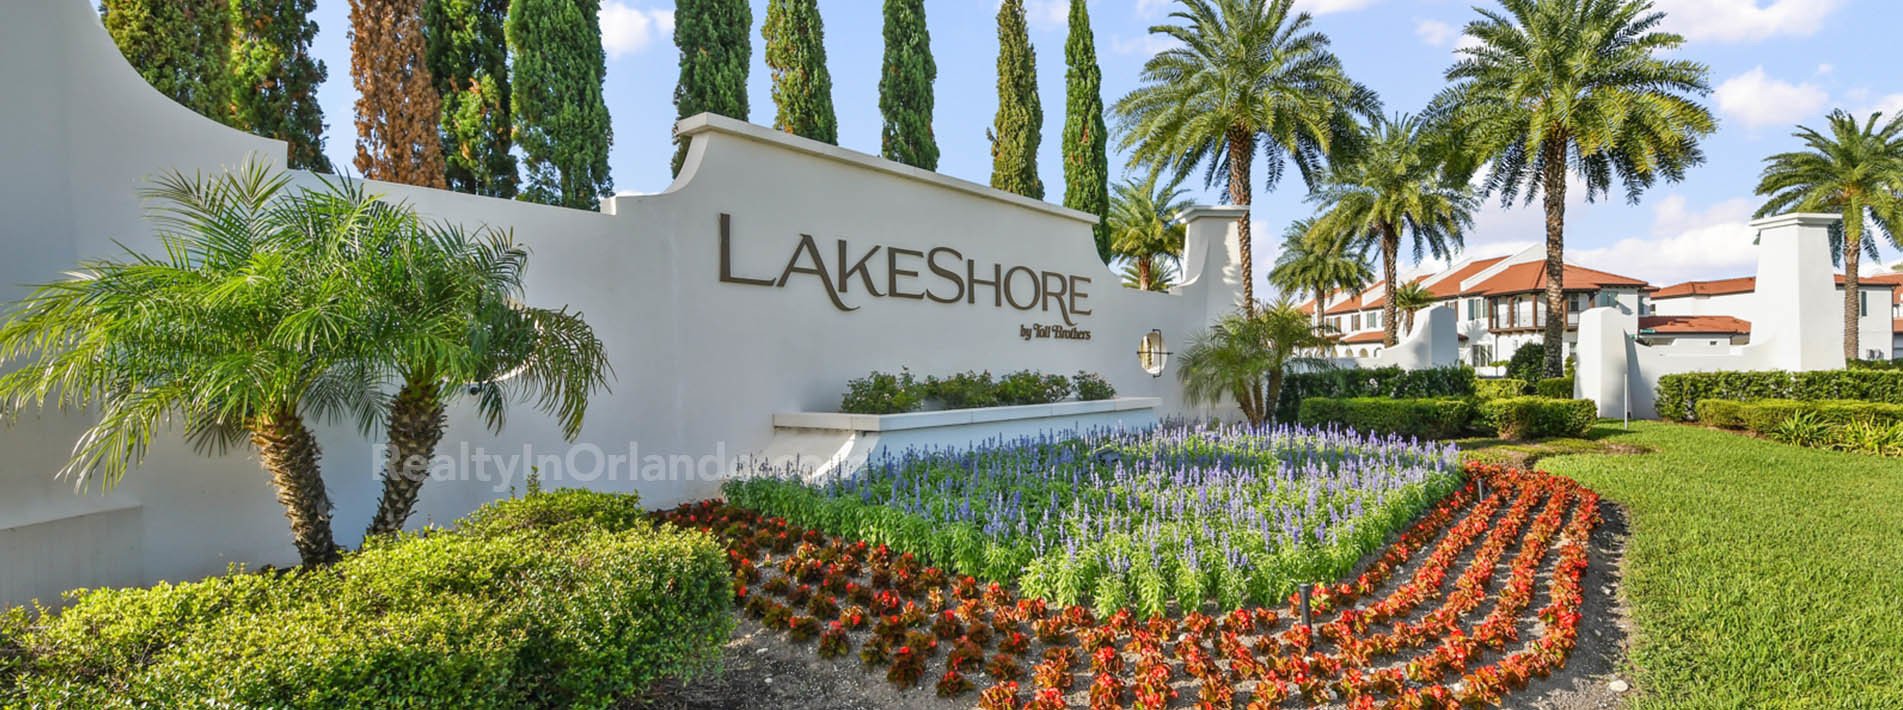 Lakeshore at Horizon West Real Estate